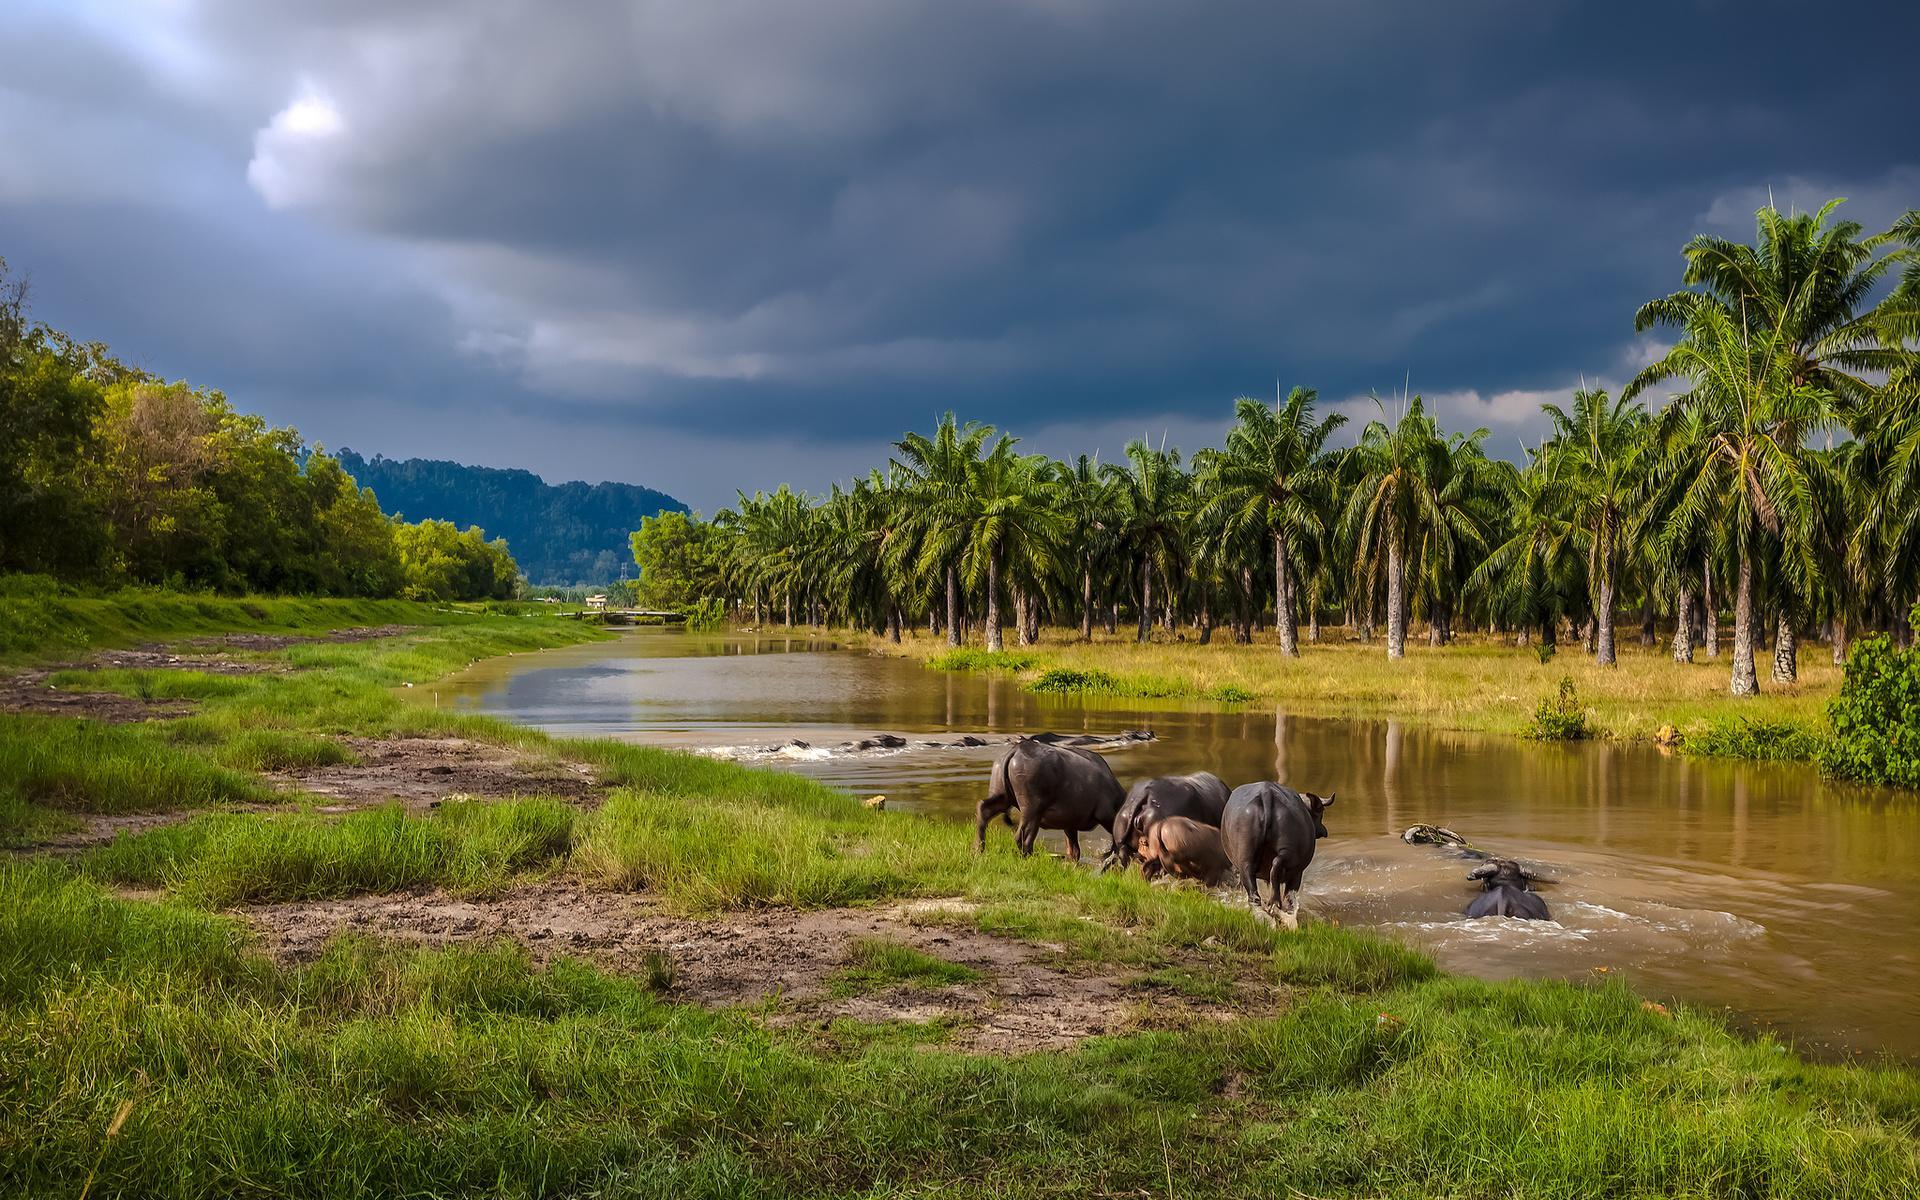 Water buffalos entering a river in southeast asia wallpaper